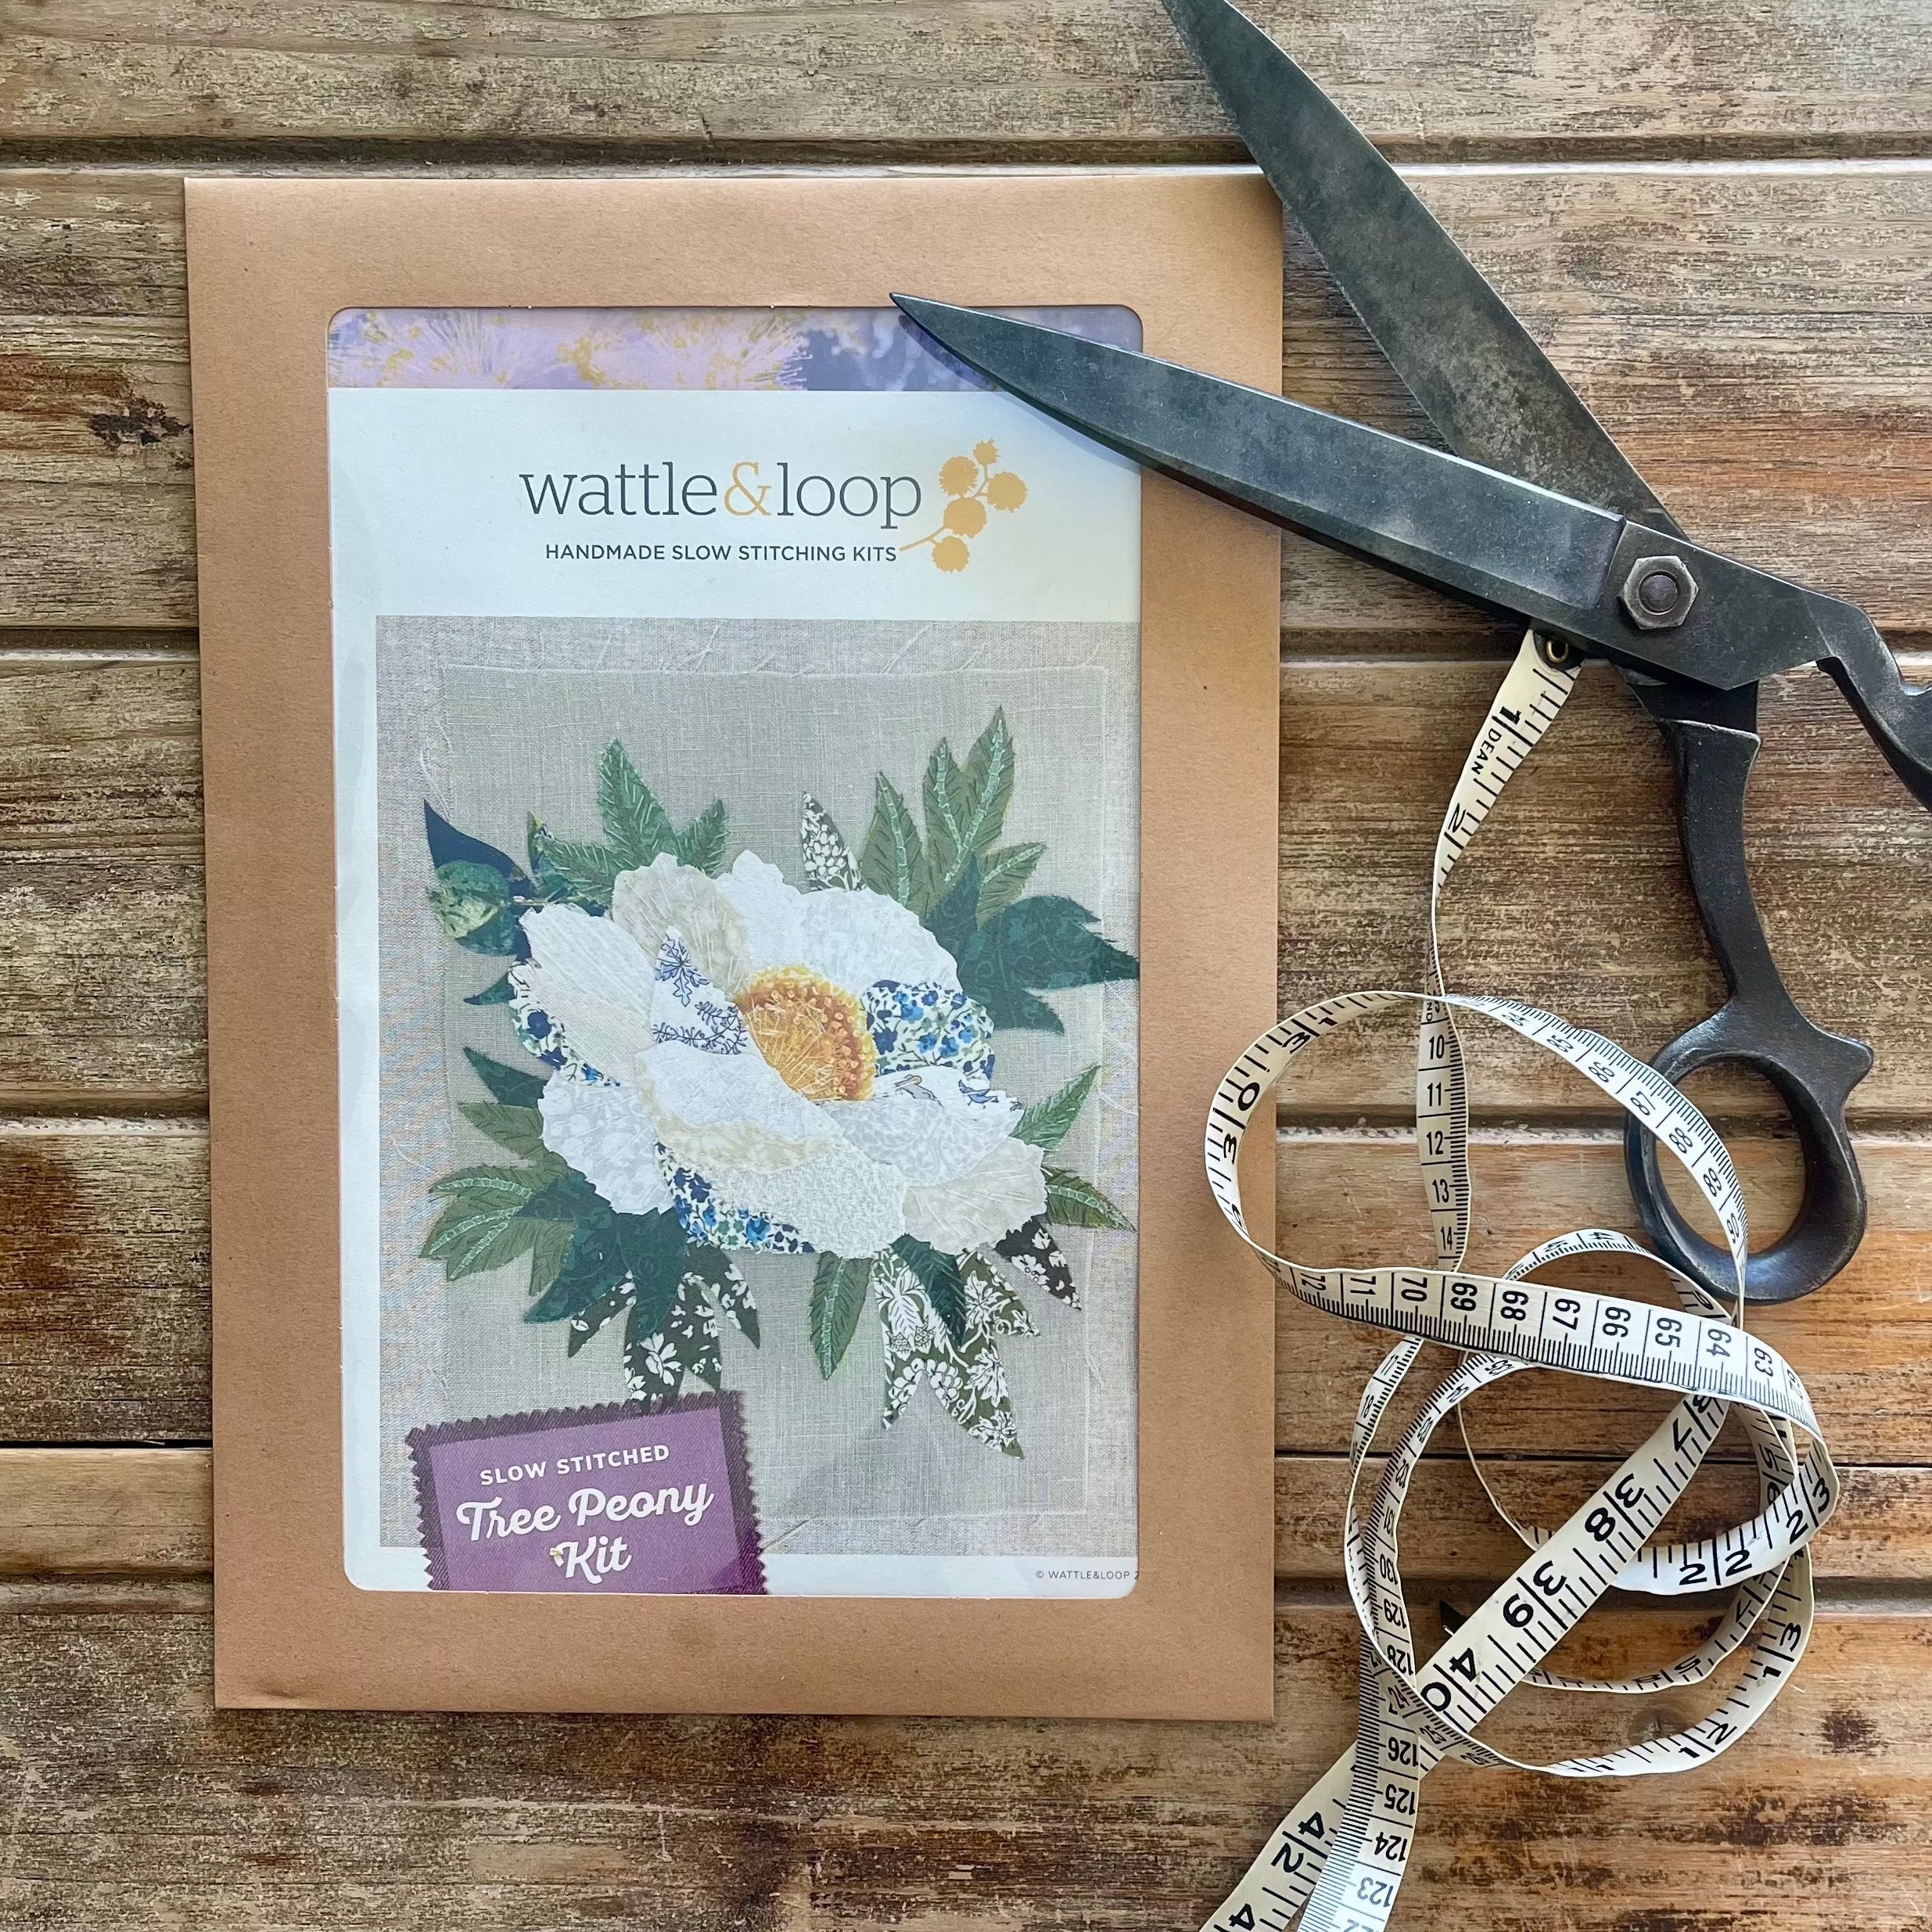 Wattle & Loop - Handmade slow sticking kits